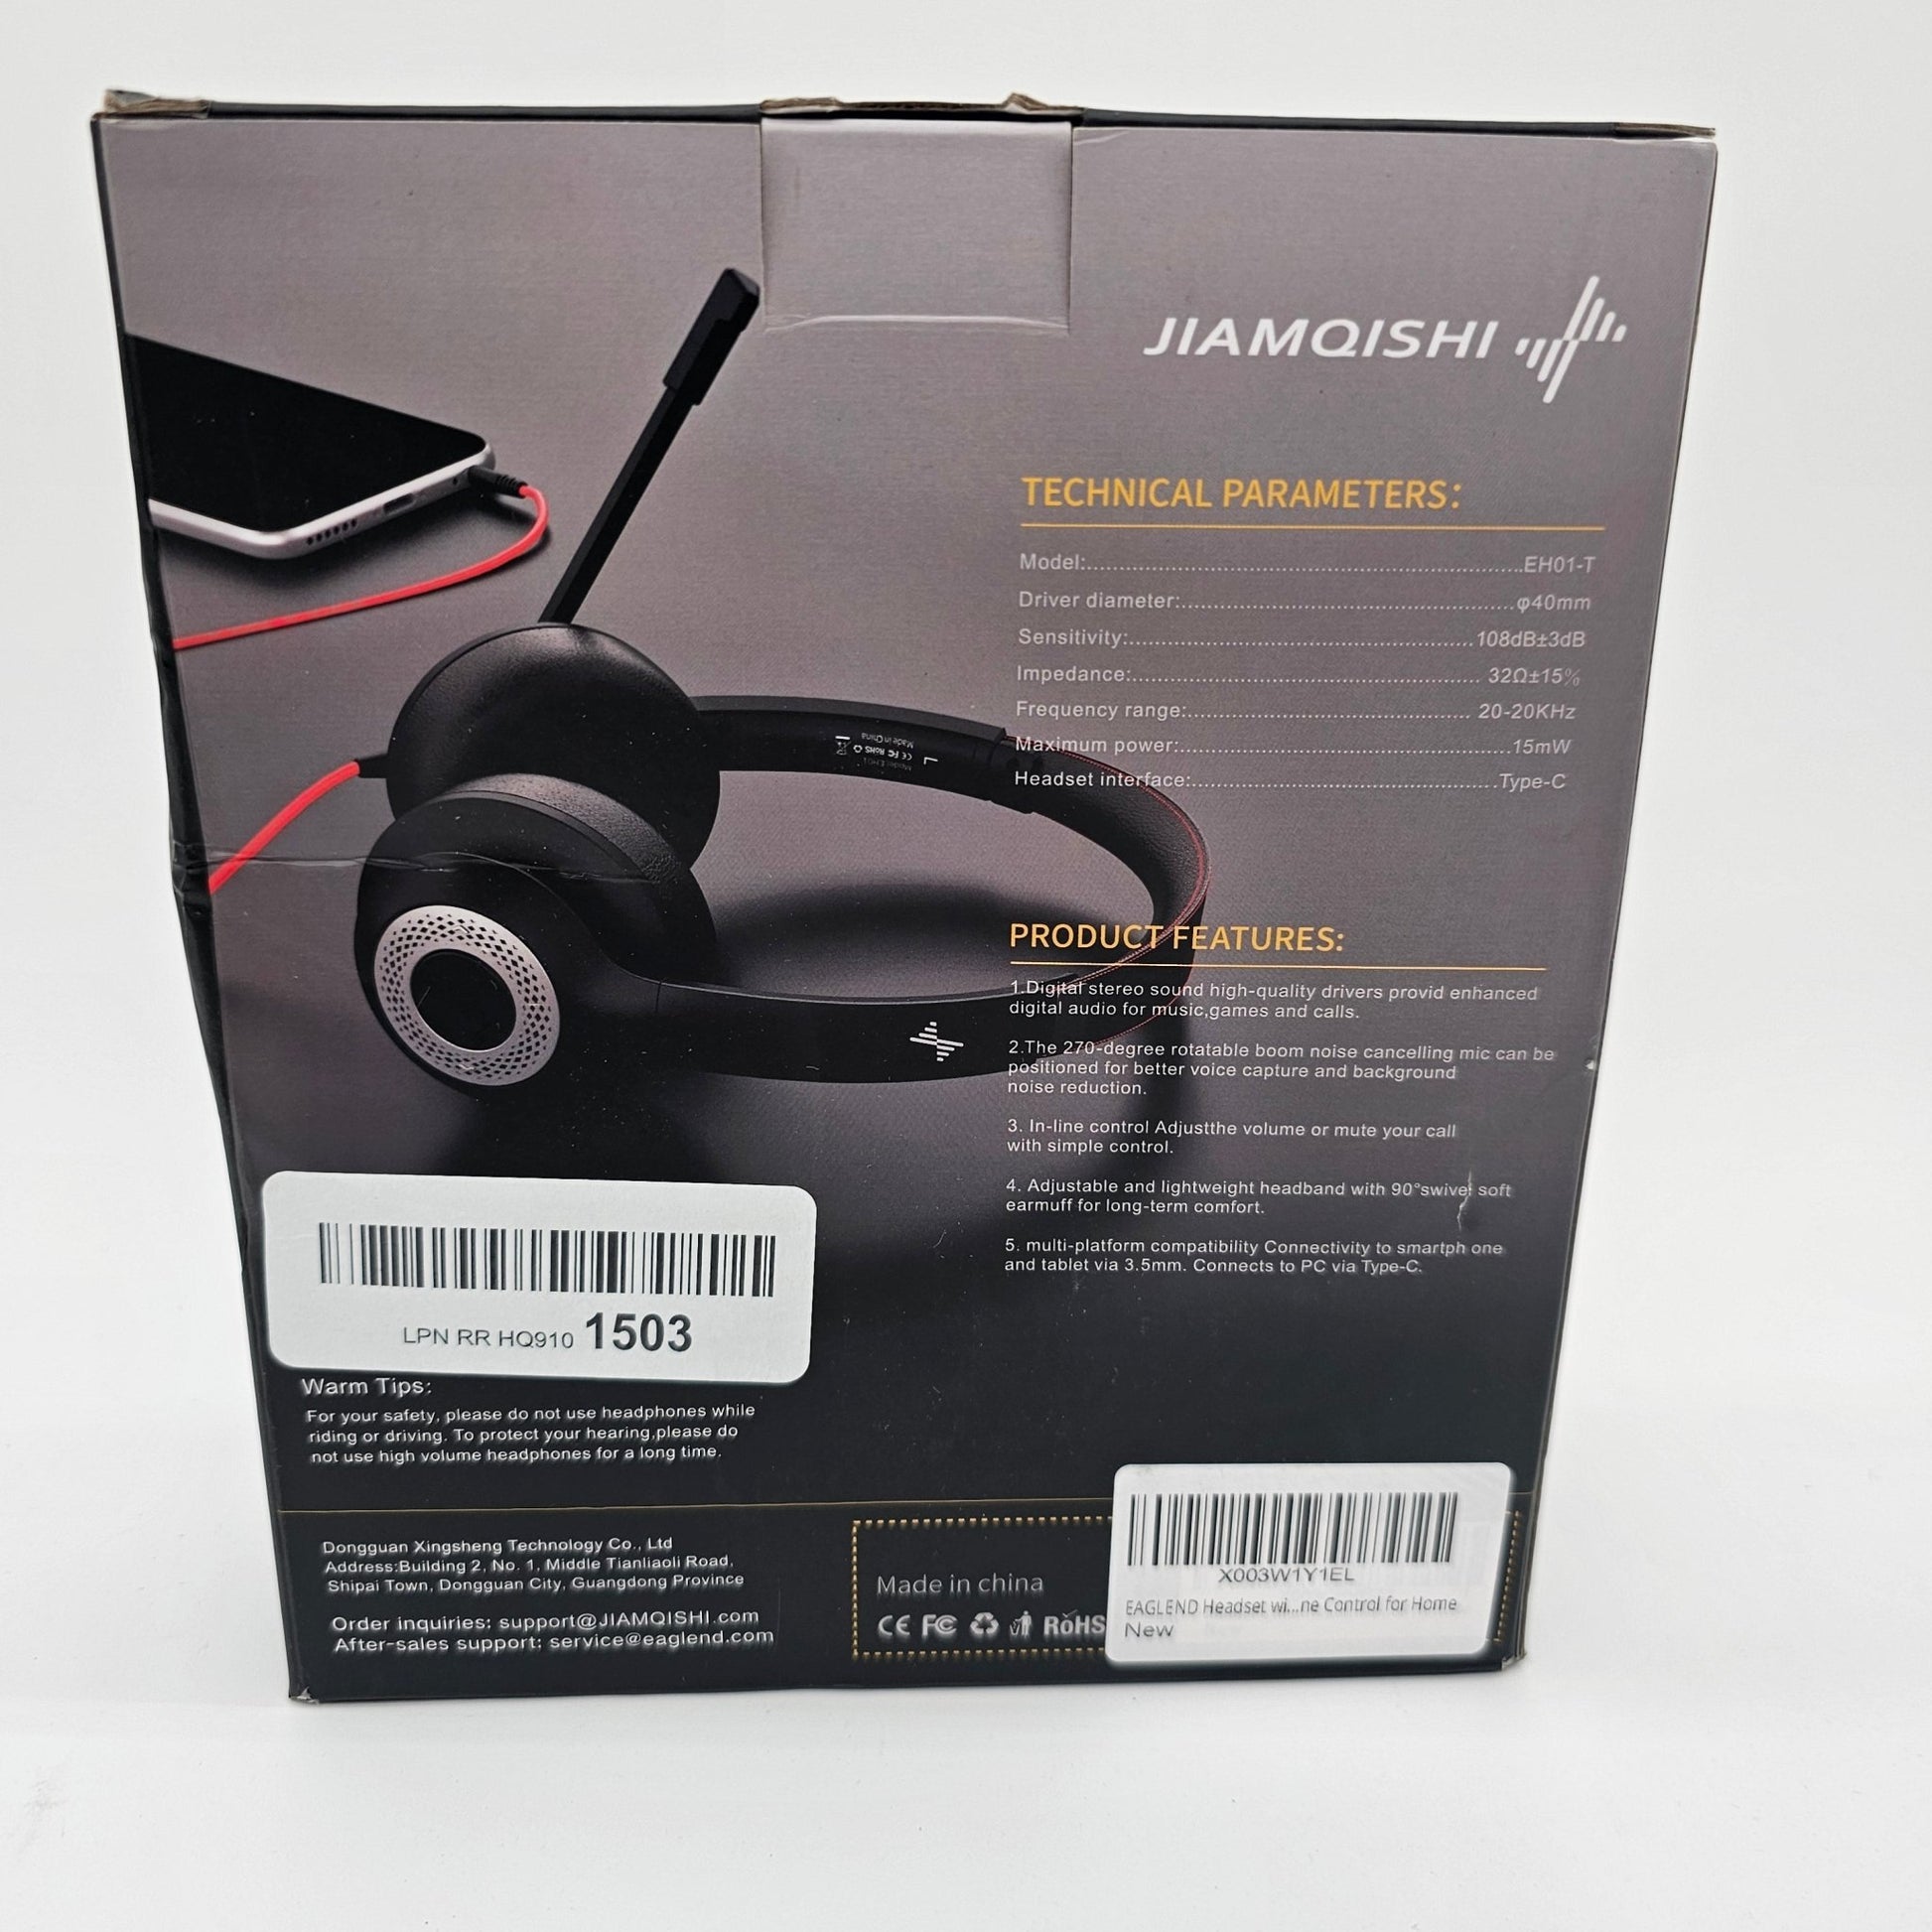 Type C 3.5mm Headset EH01-T JIAMQISHI - DQ Distribution